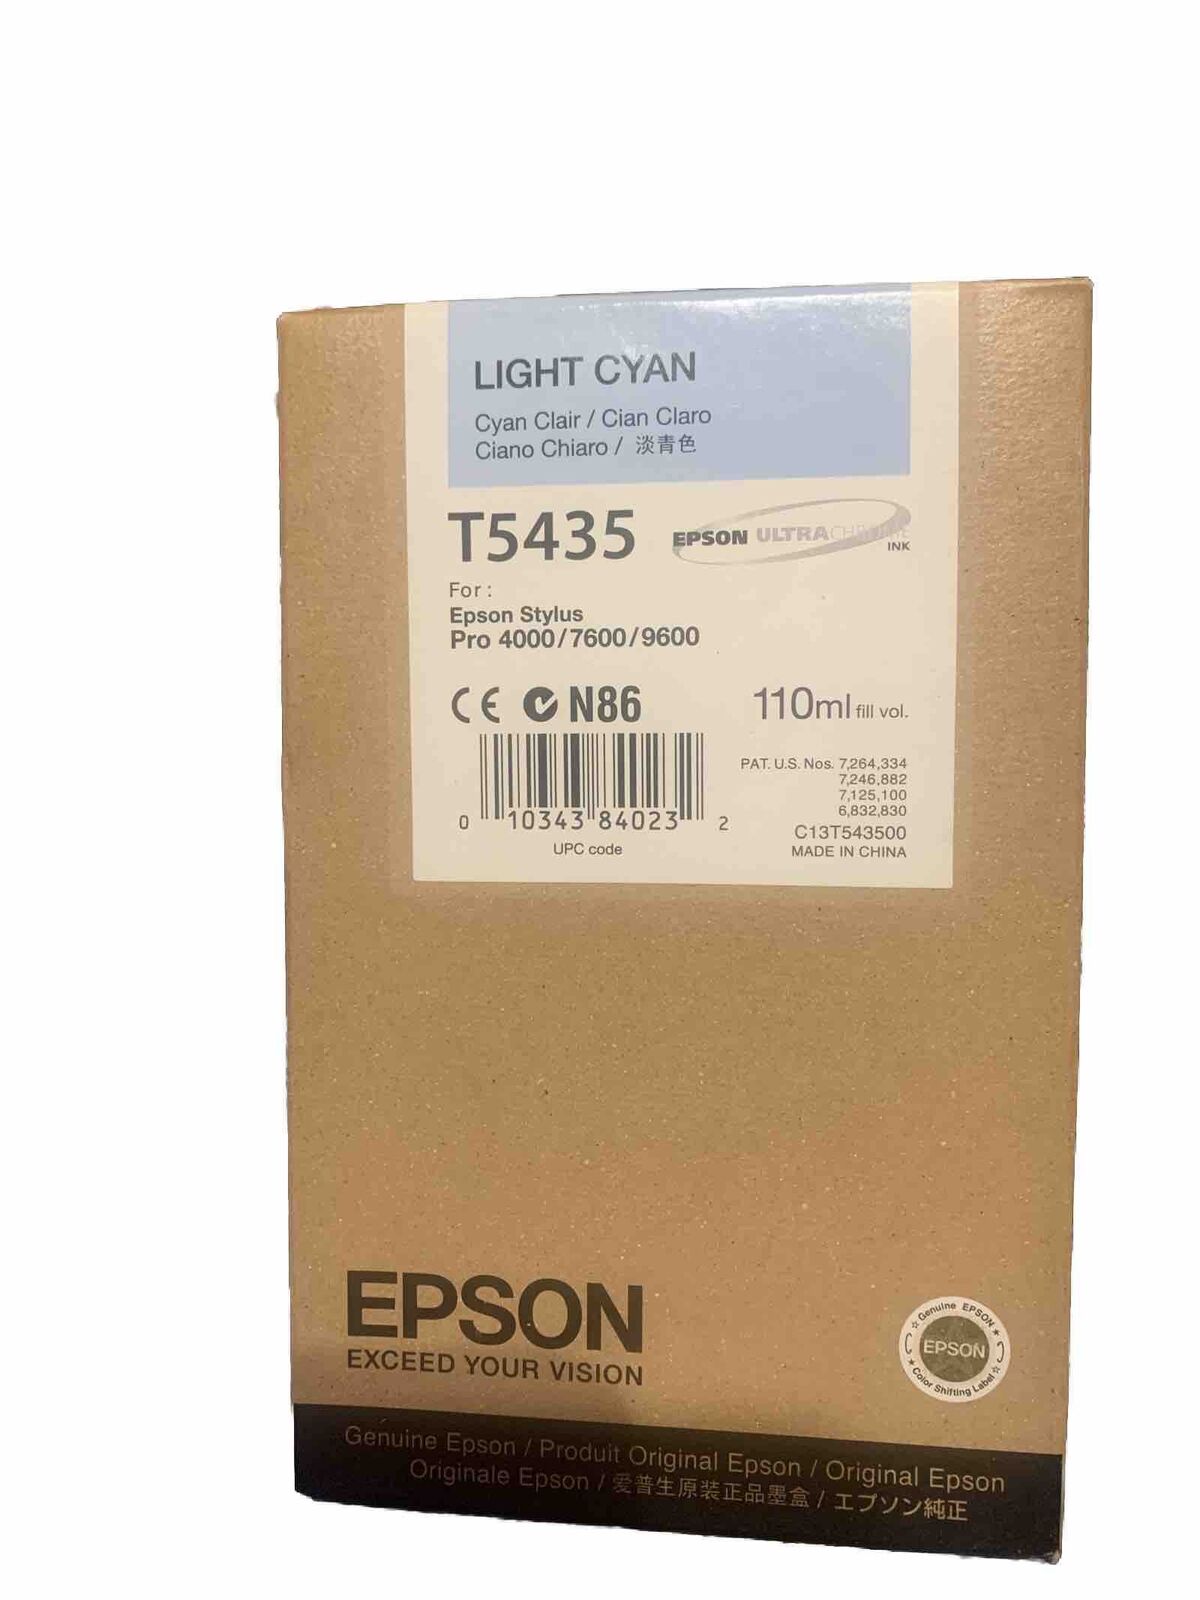 GENUINE EPSON T5435 INK LIGHT CYAN STYLUS PRO 4000 7600 9600 SEALED Exp 08-2011